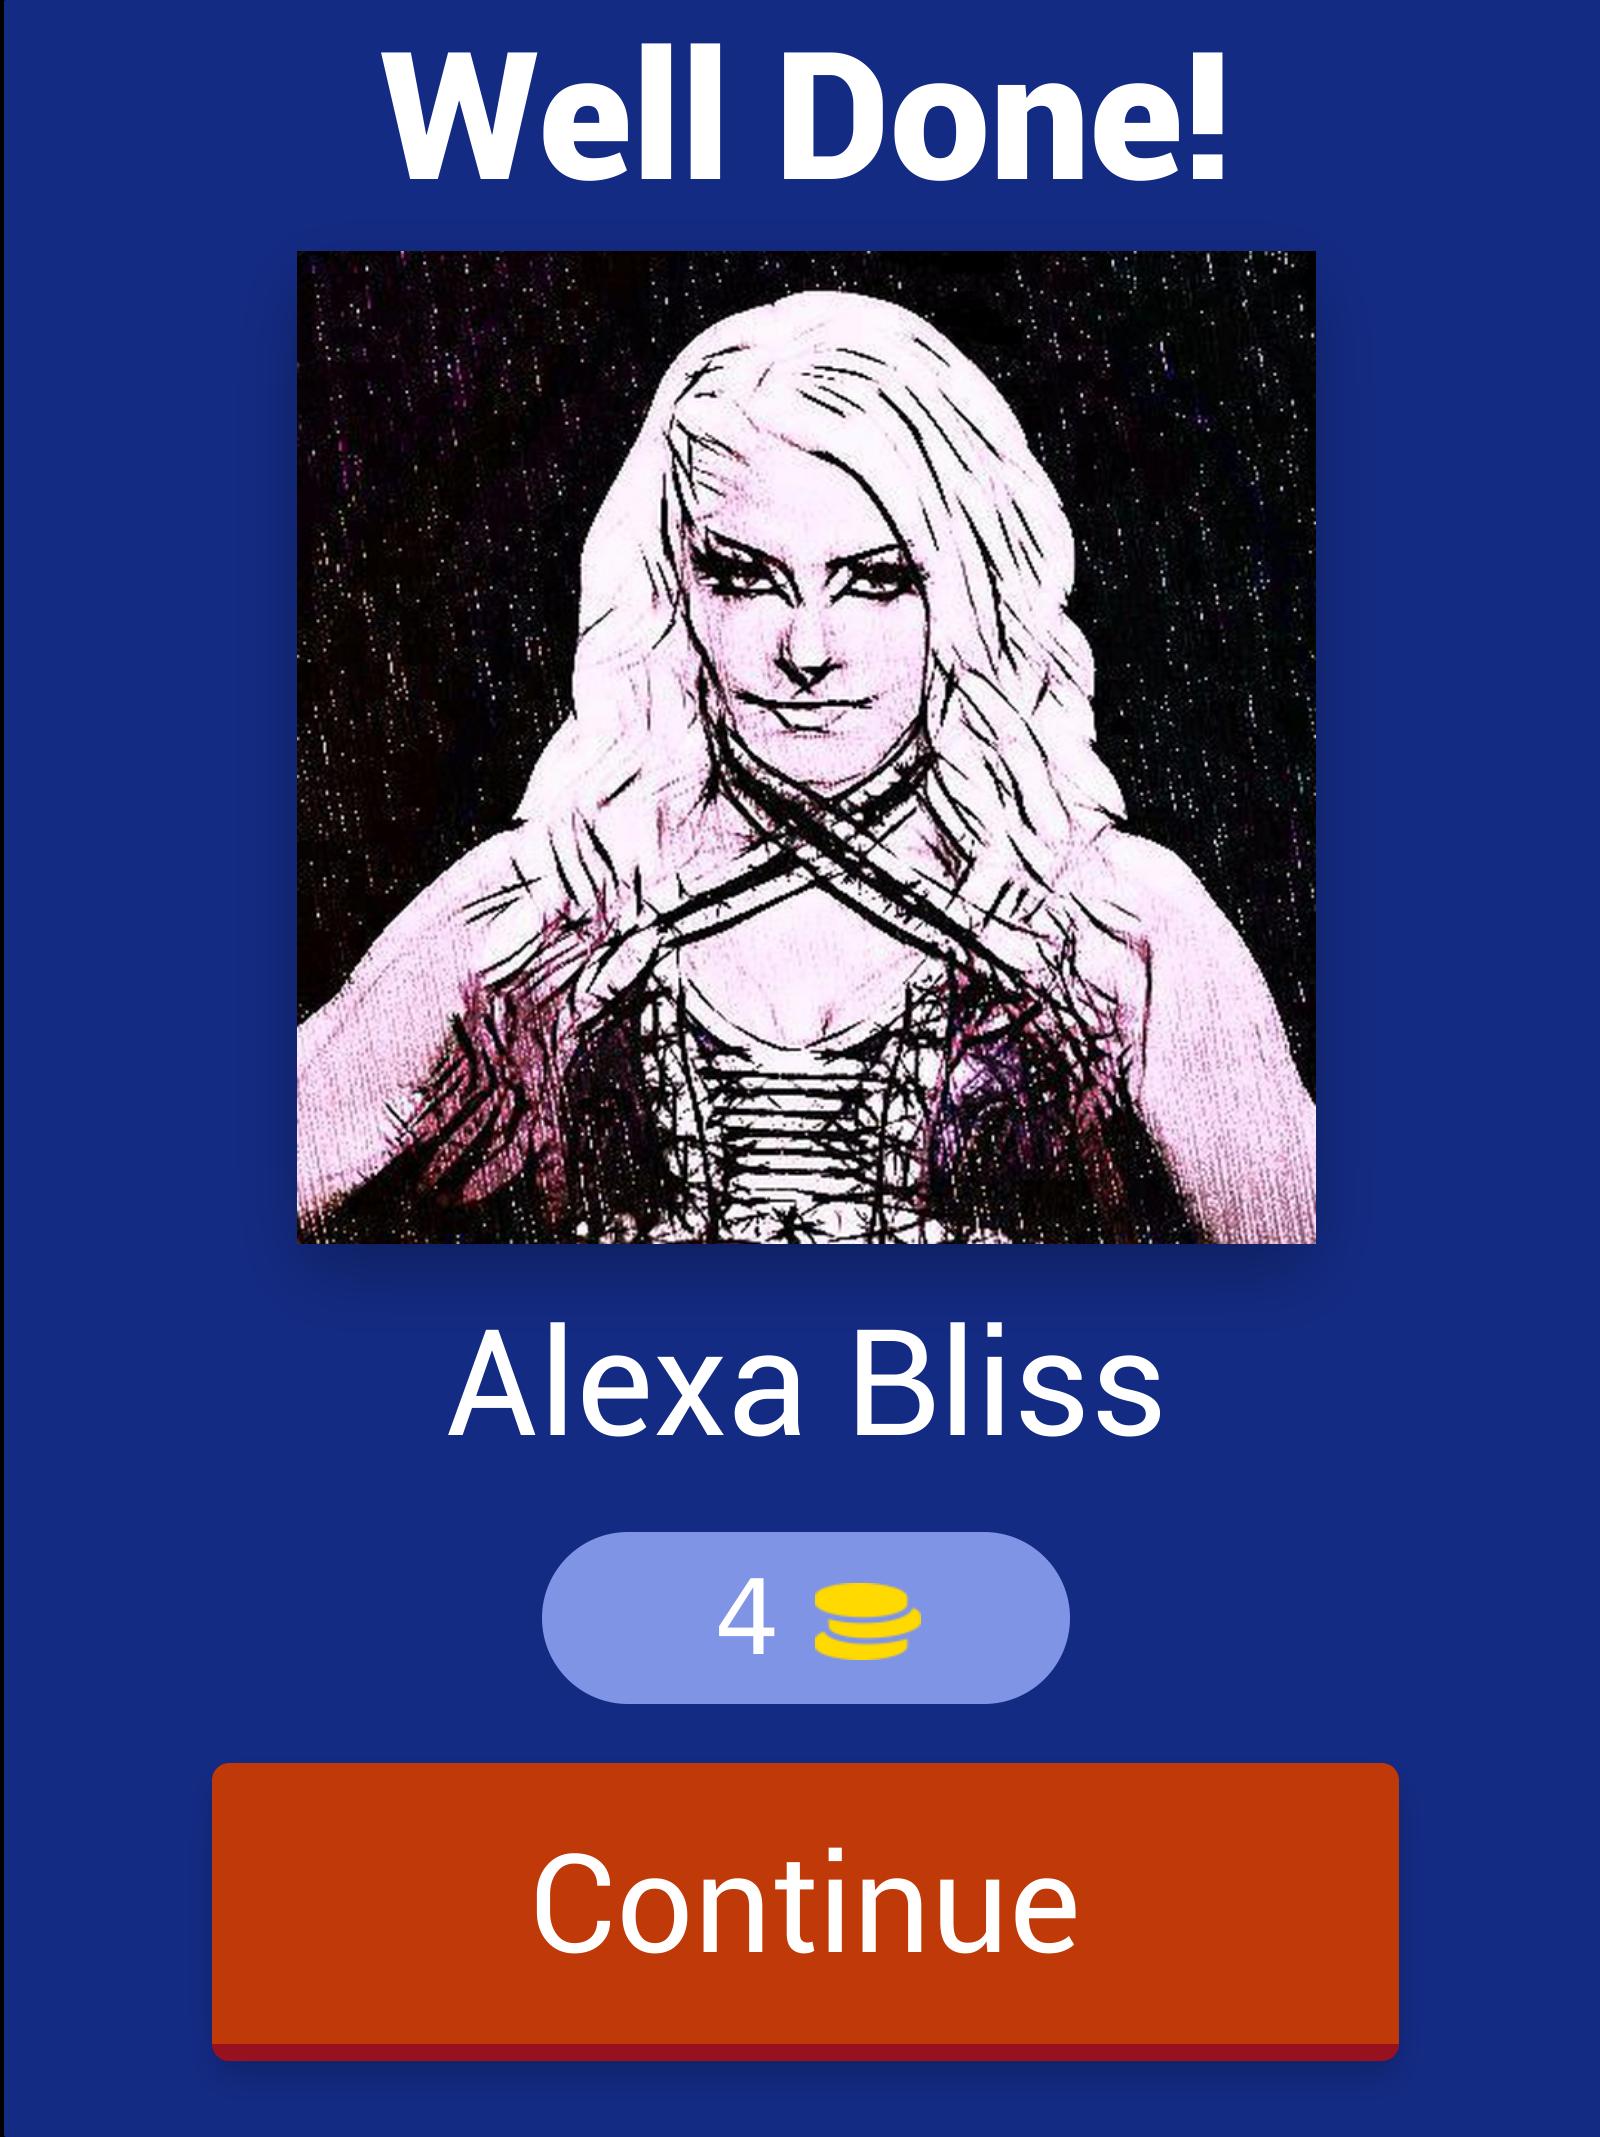 Wrestling Superstars Diva Quiz For Android Apk Download - quiz diva roblox 2019